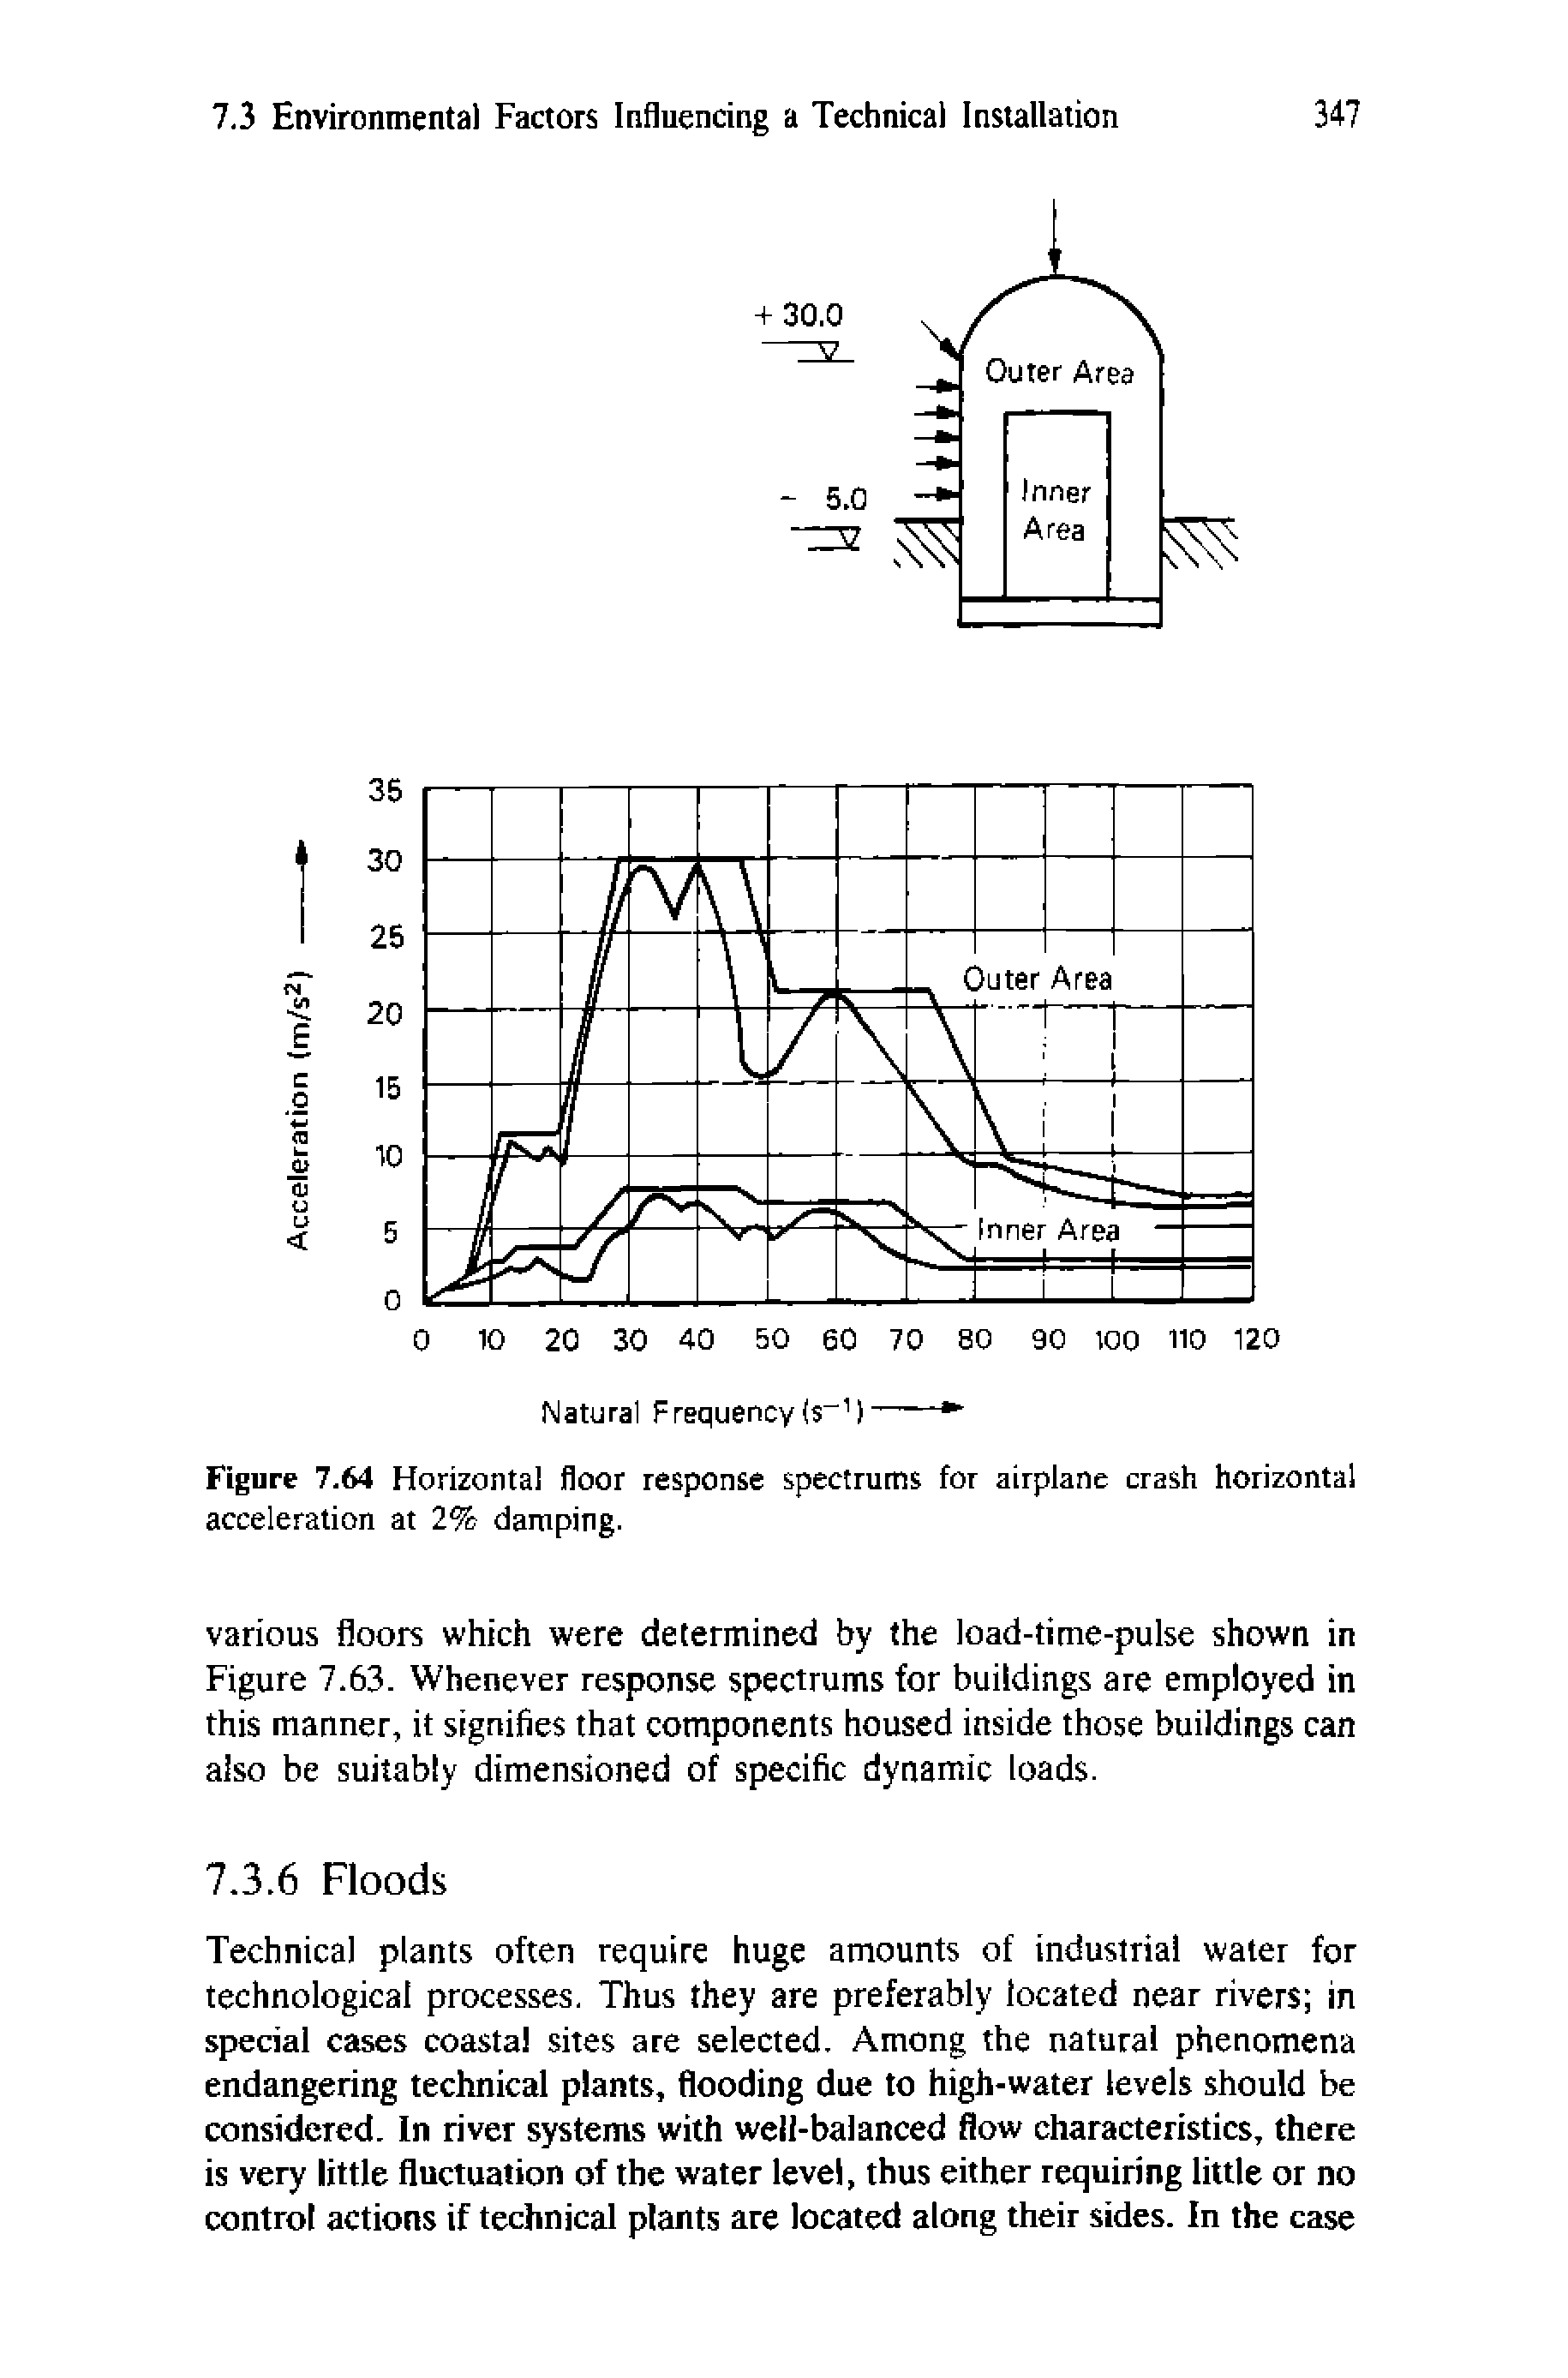 Figure 7.64 Horizontal floor response spectrums for airplane crash horizontal acceleration at 2% damping.